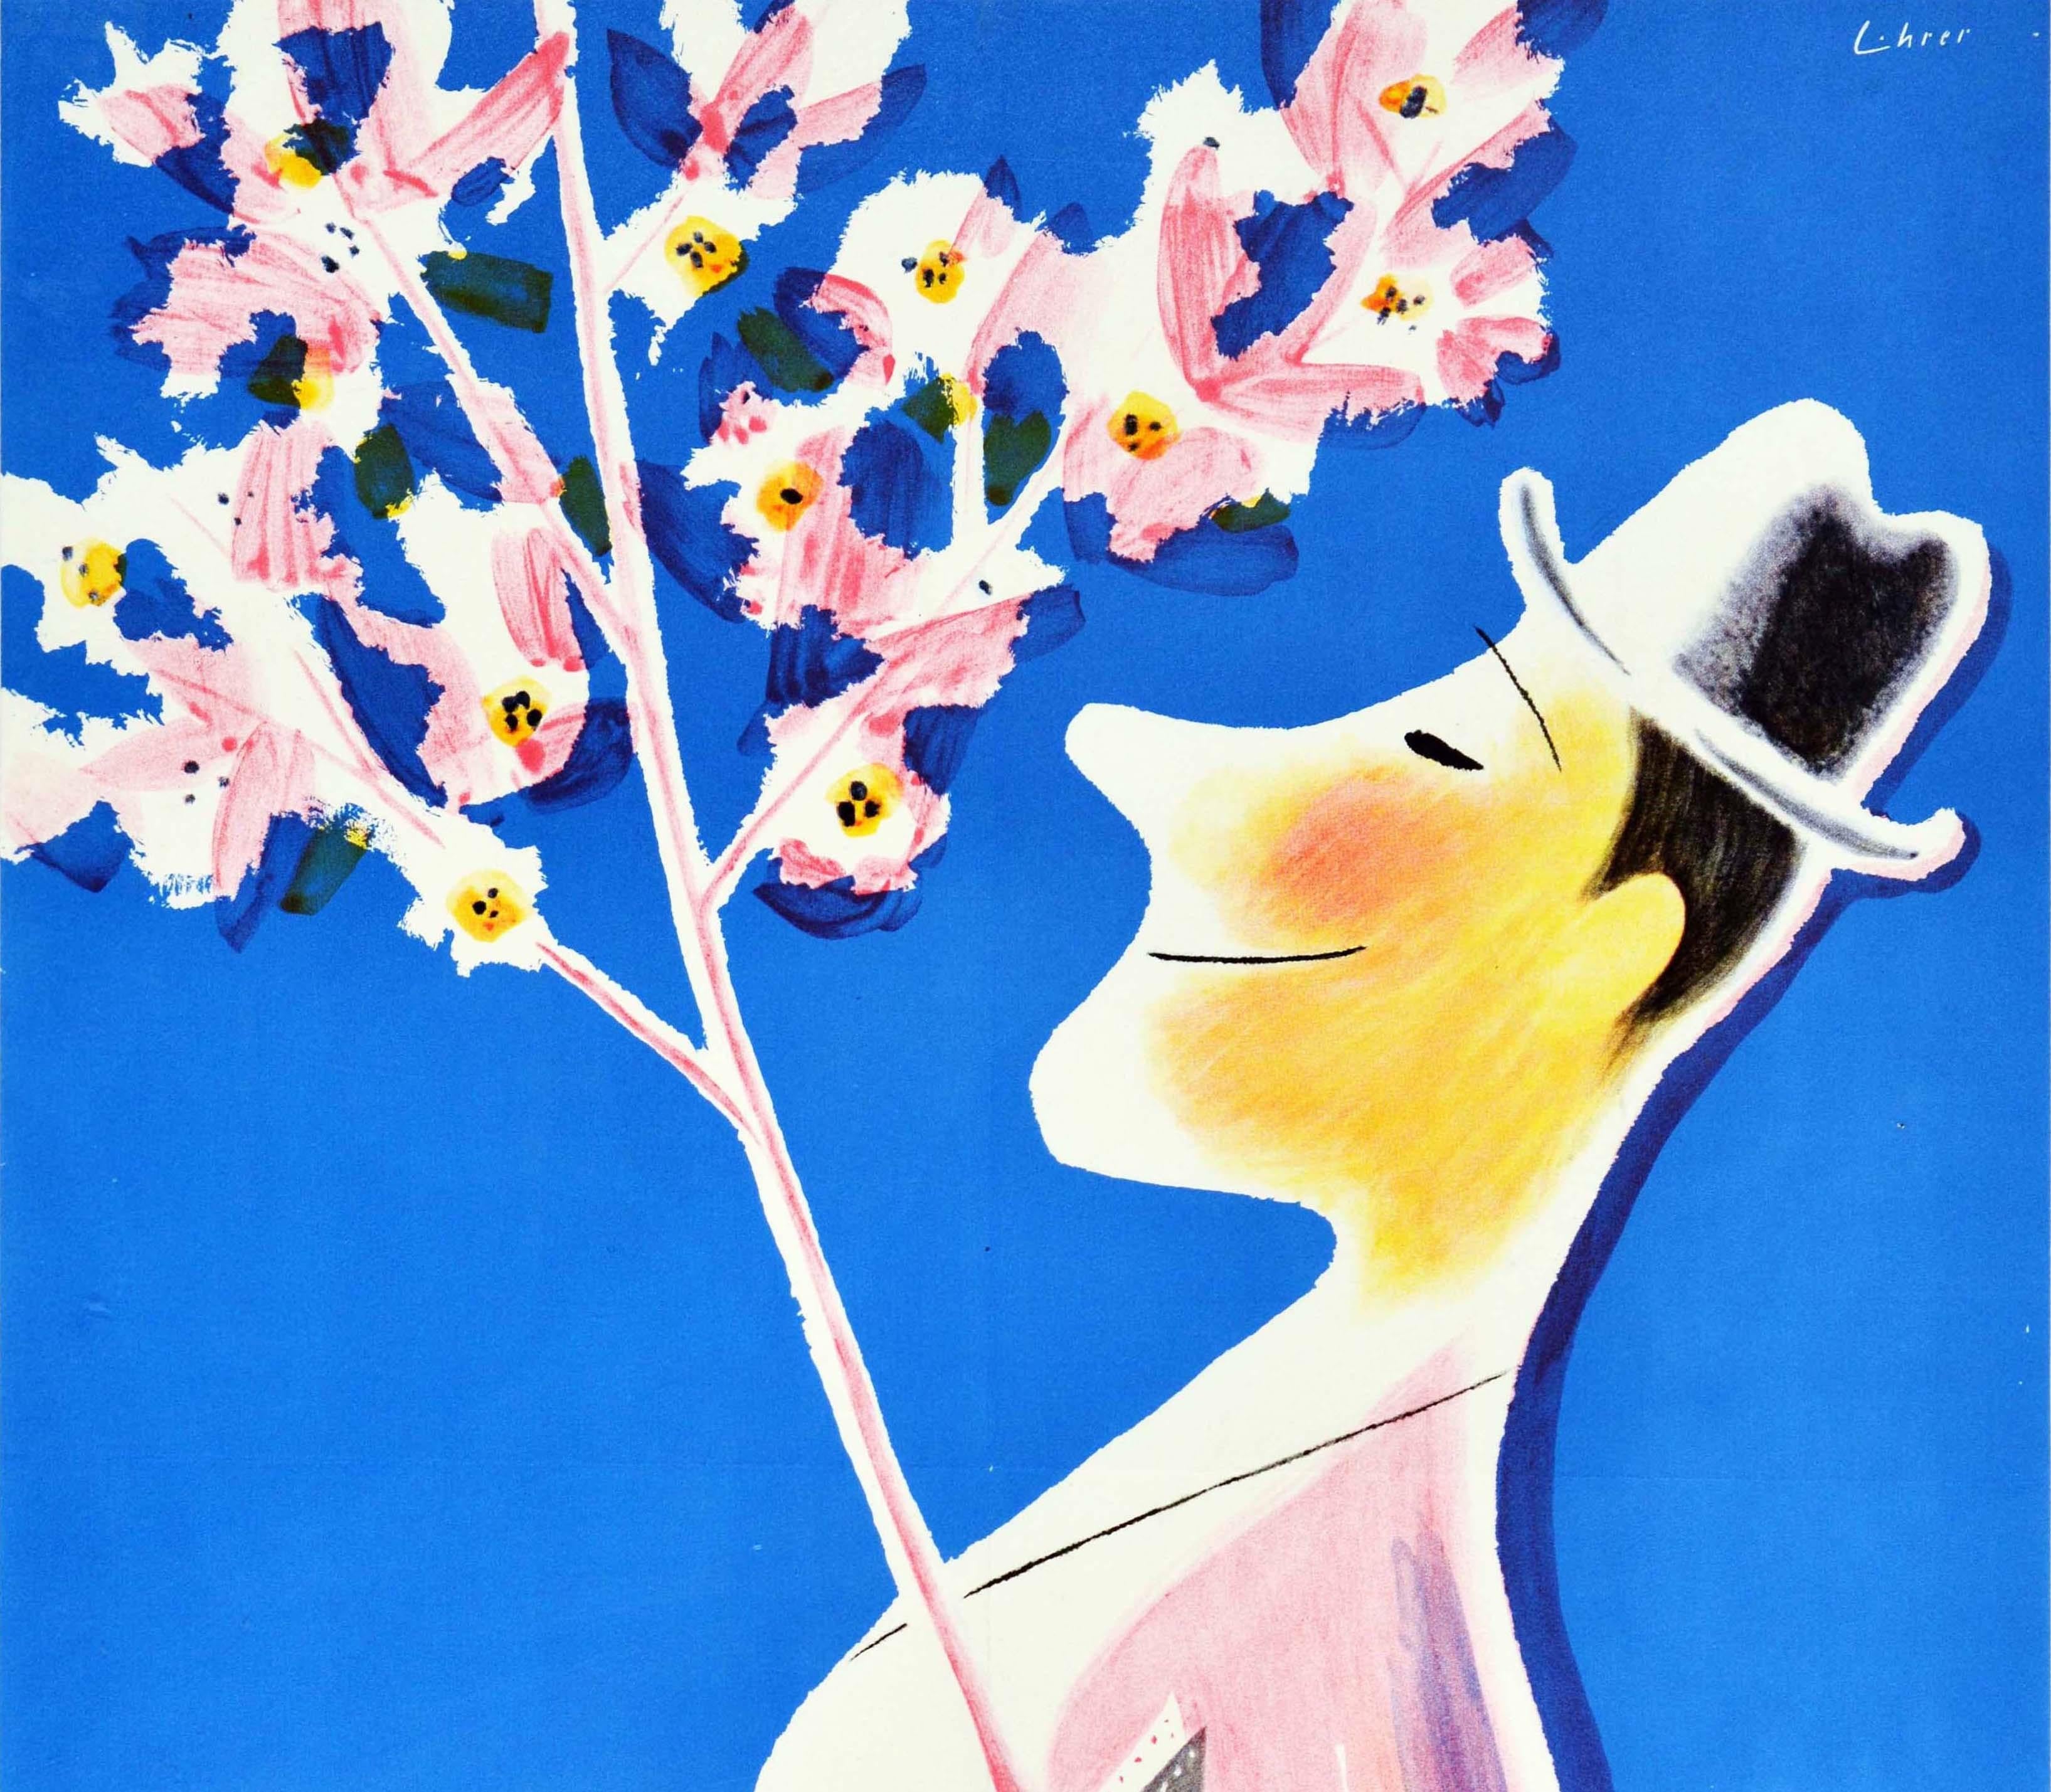 Original Vintage Travel Poster Wiesbaden Germany Spa Flower Blossom Tree Design - Print by Hanns Lohrer